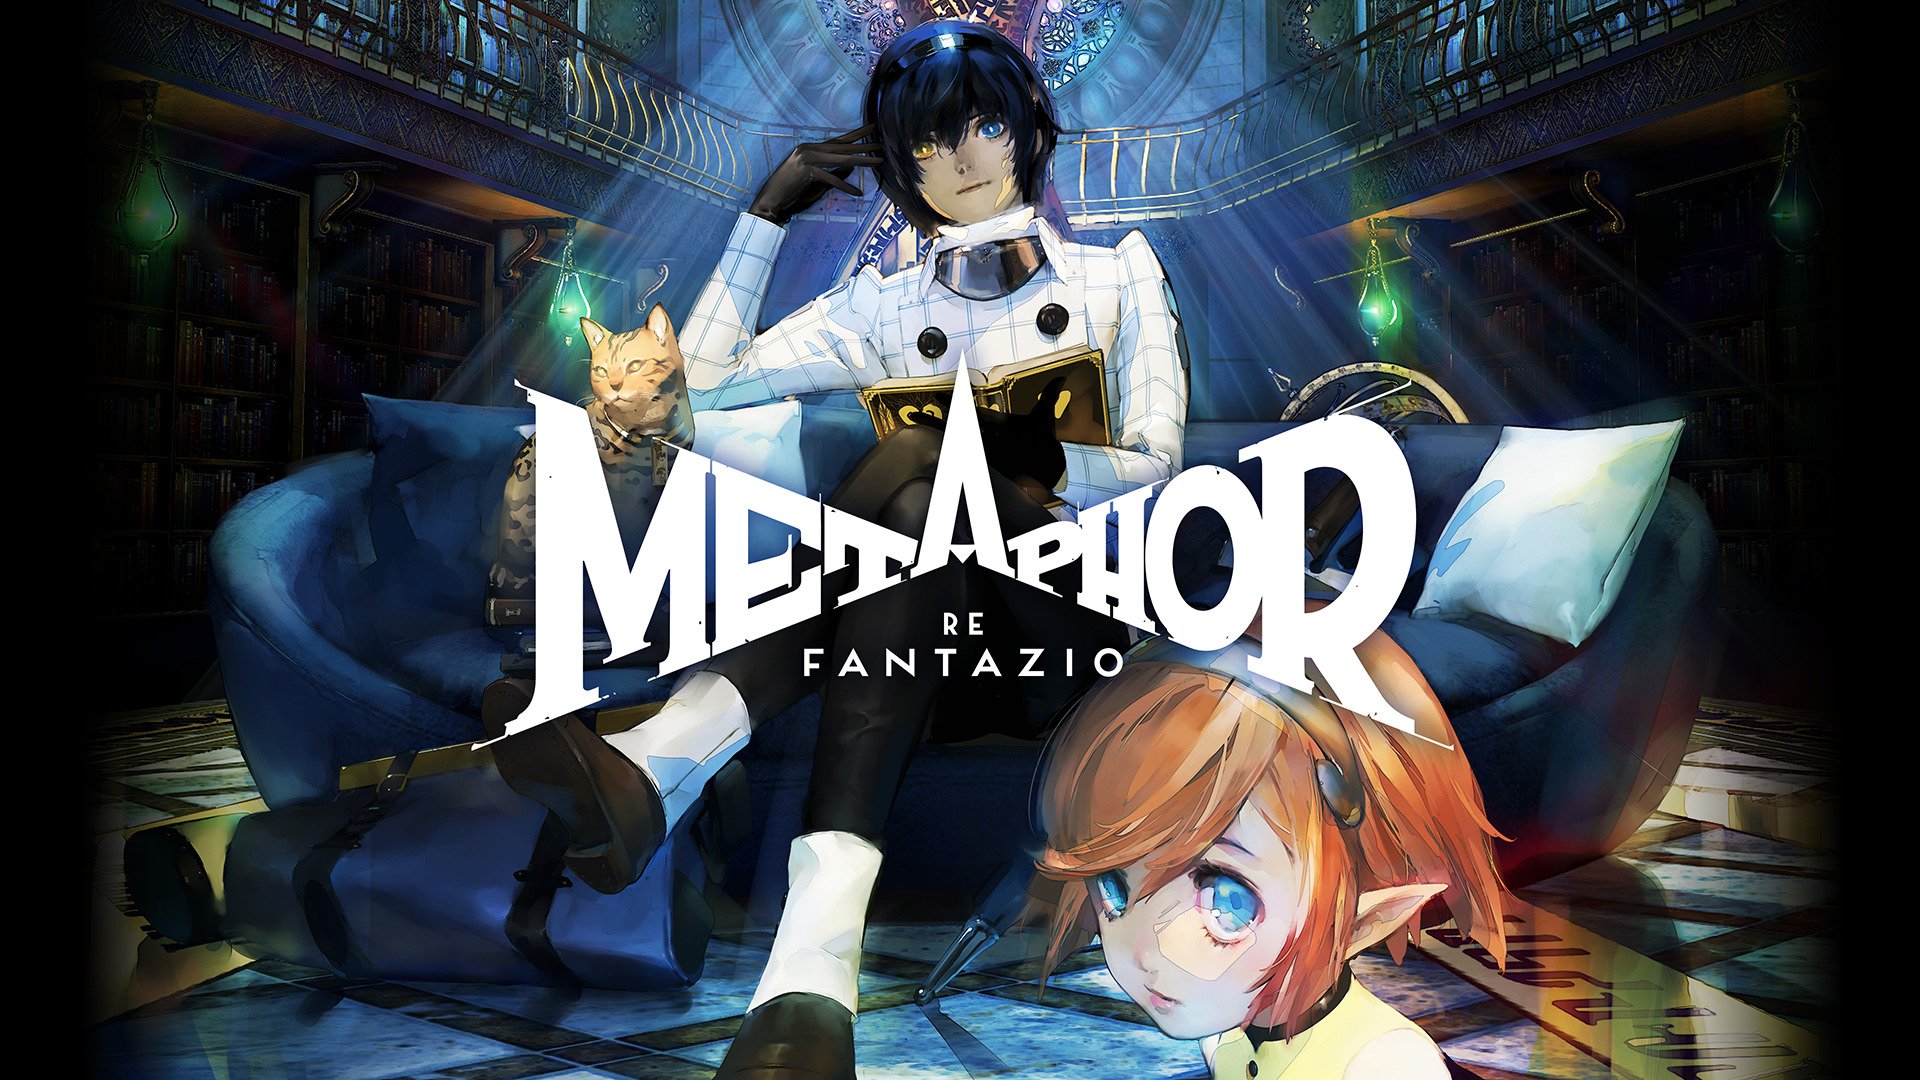 The Gamer: Fantasia Manga